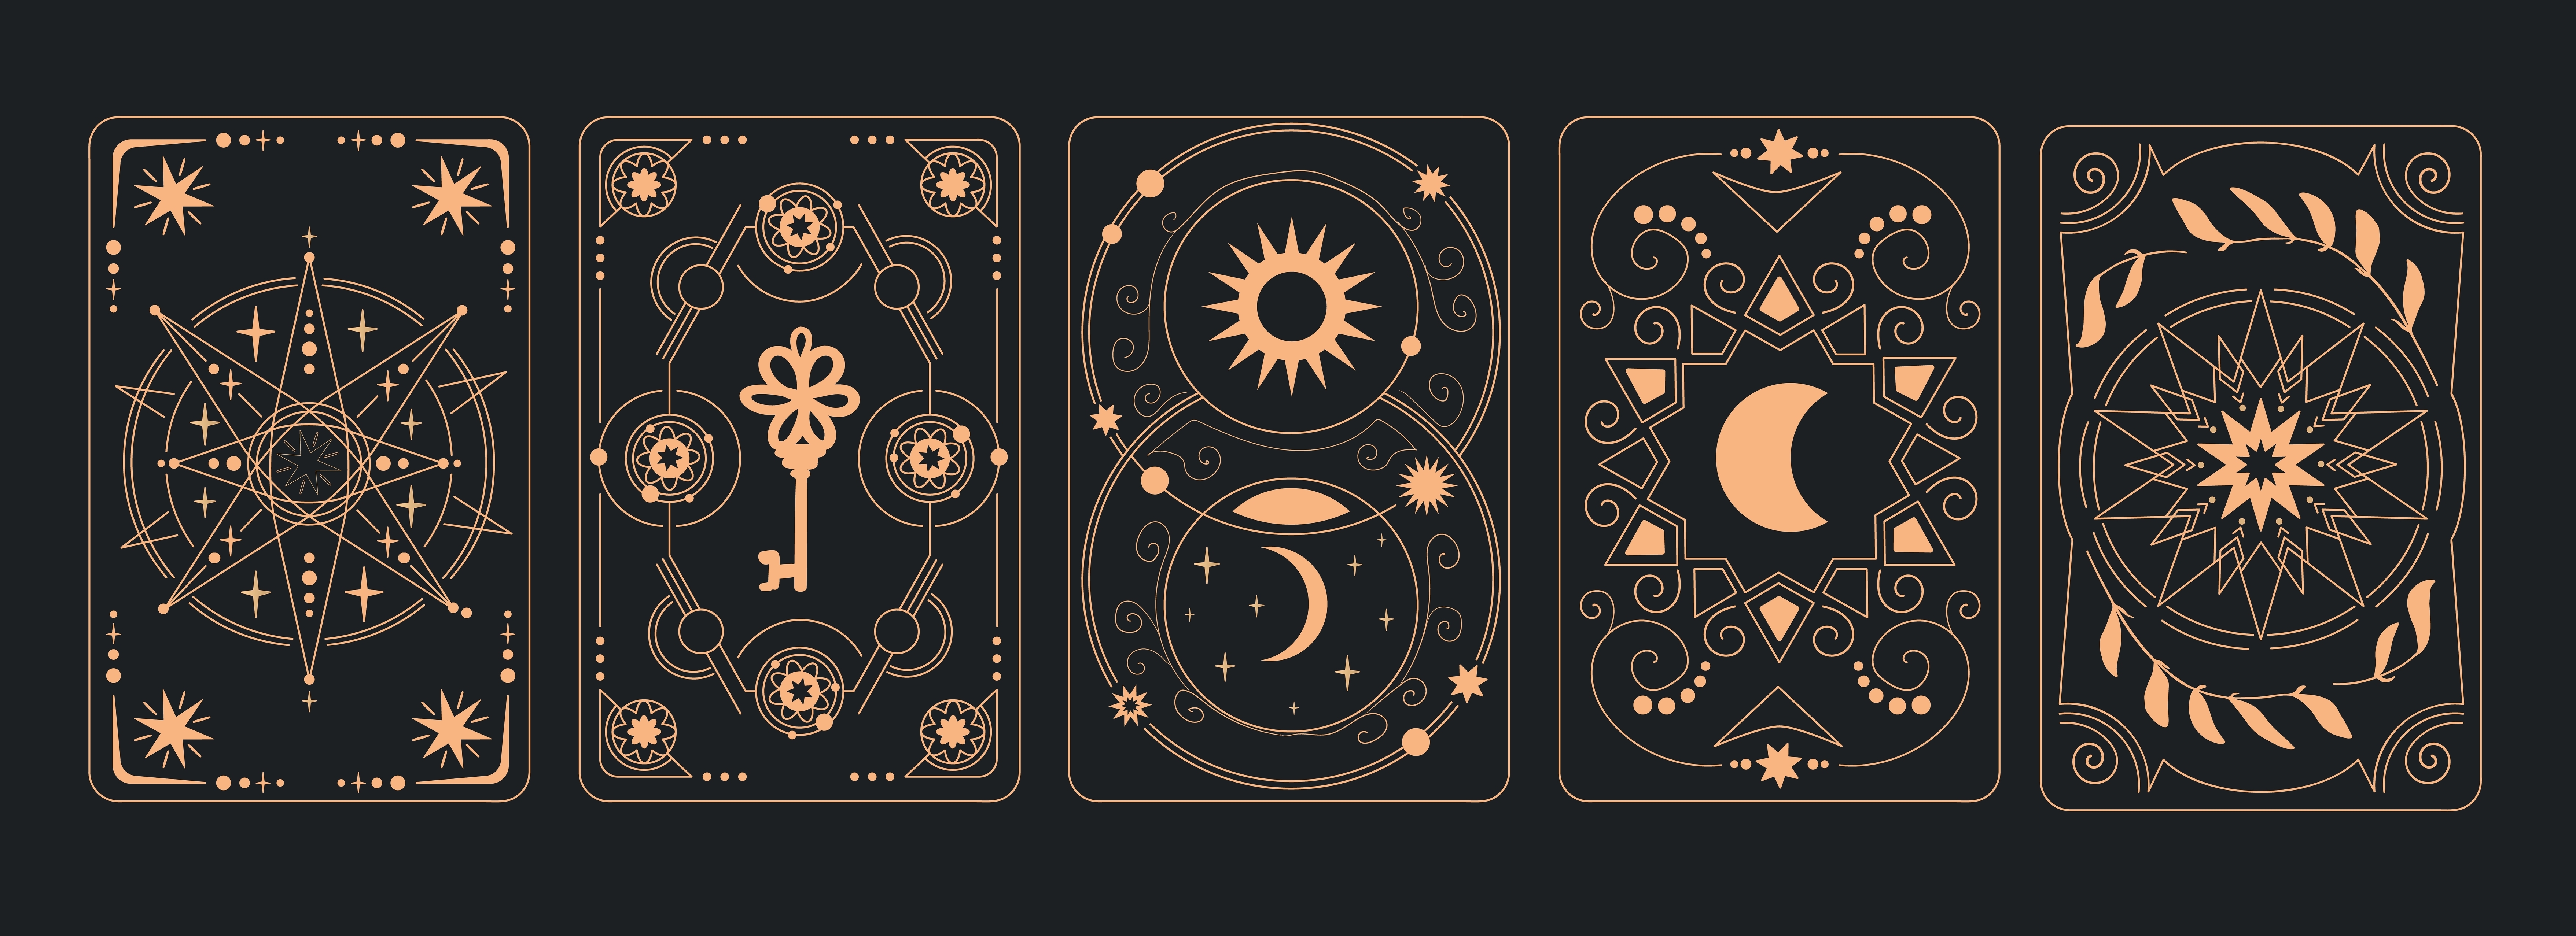 A row of black tarot cards face down